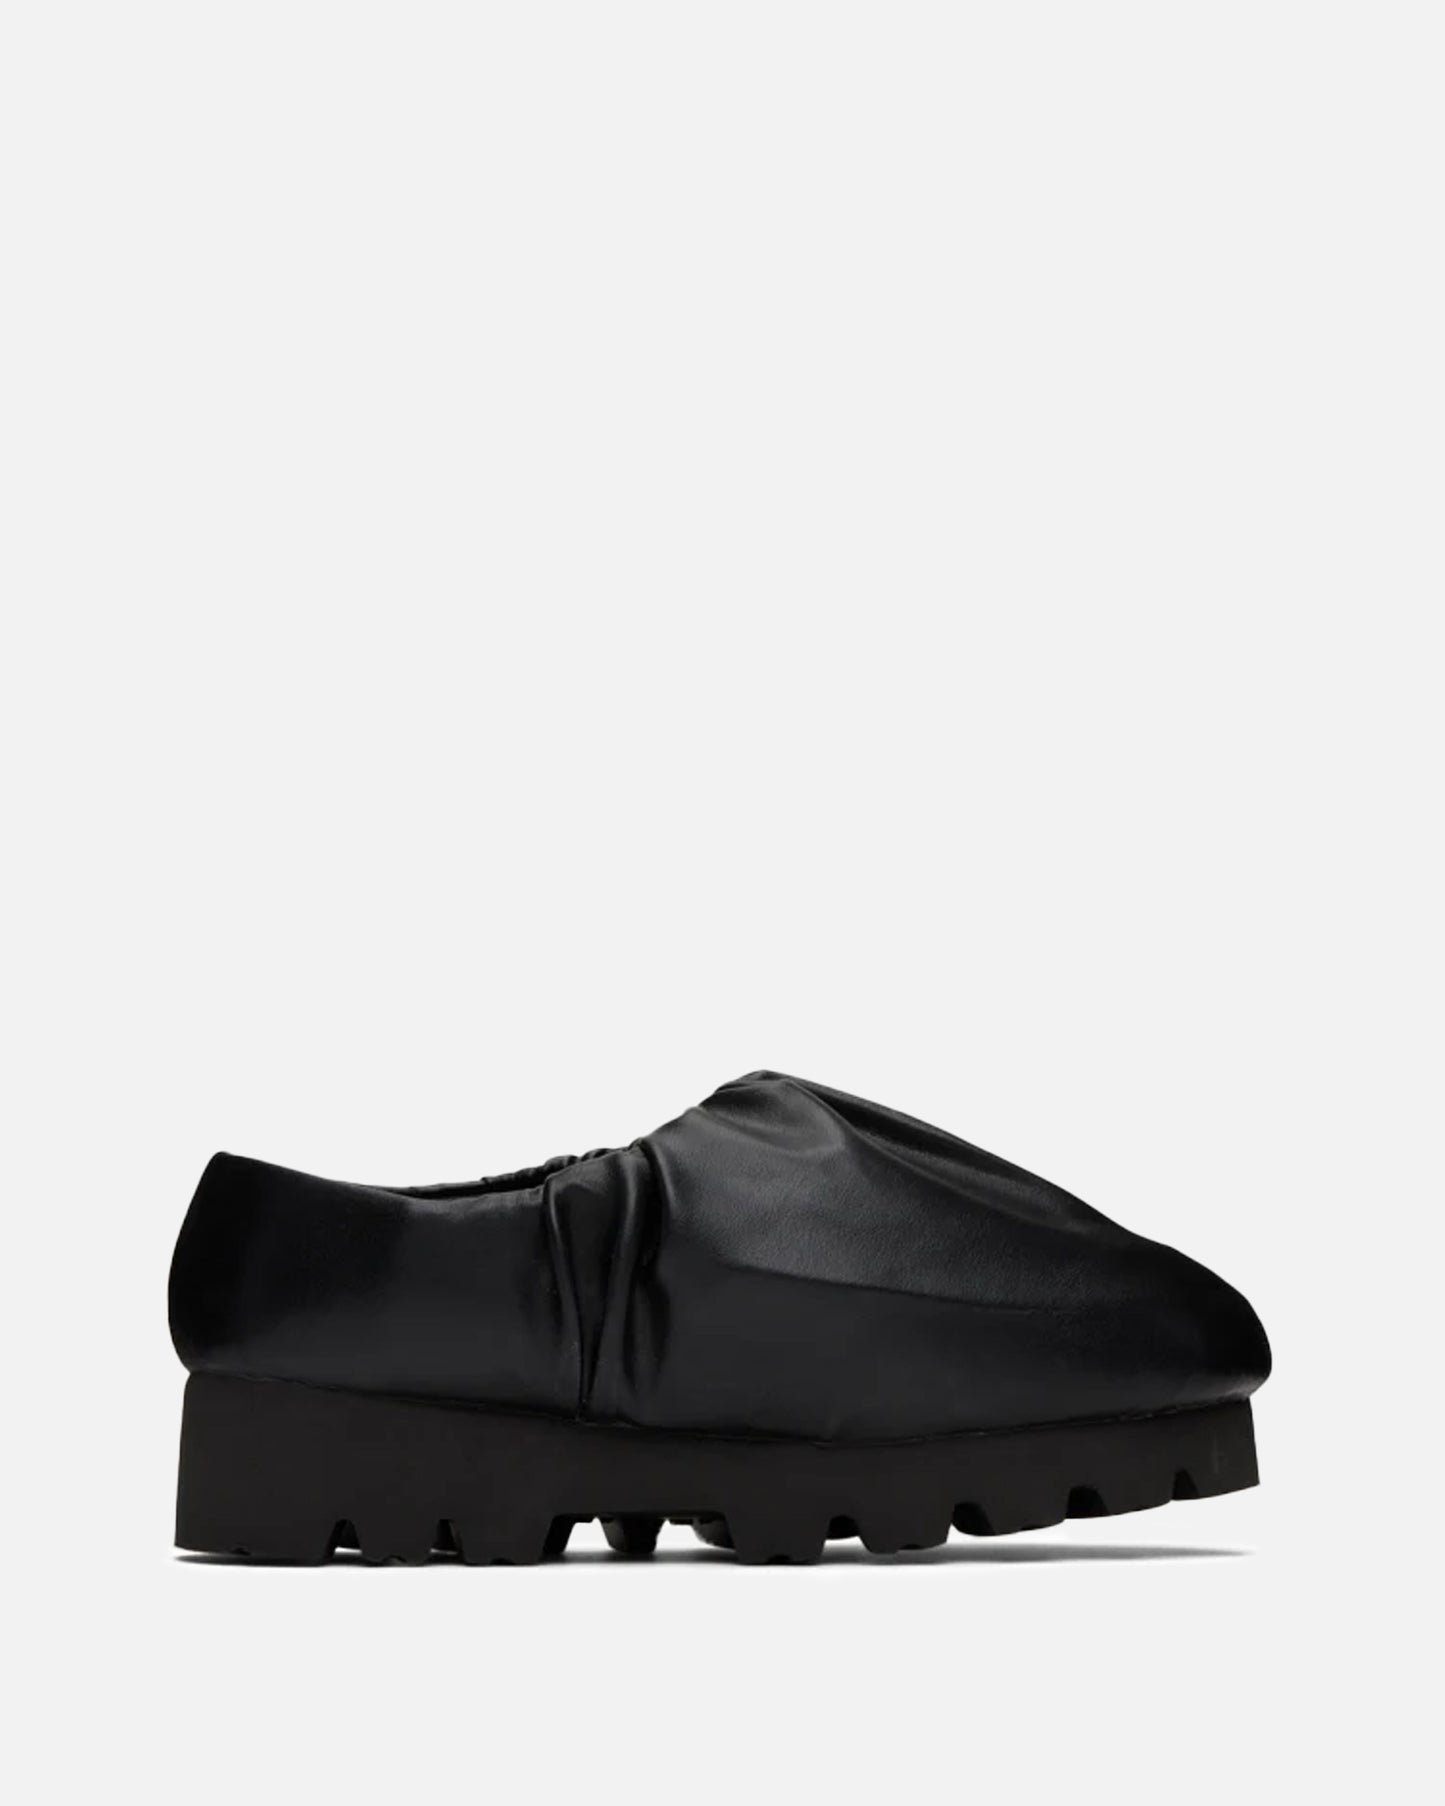 YUME YUME Men's Shoes Low Camp Shoe in Black